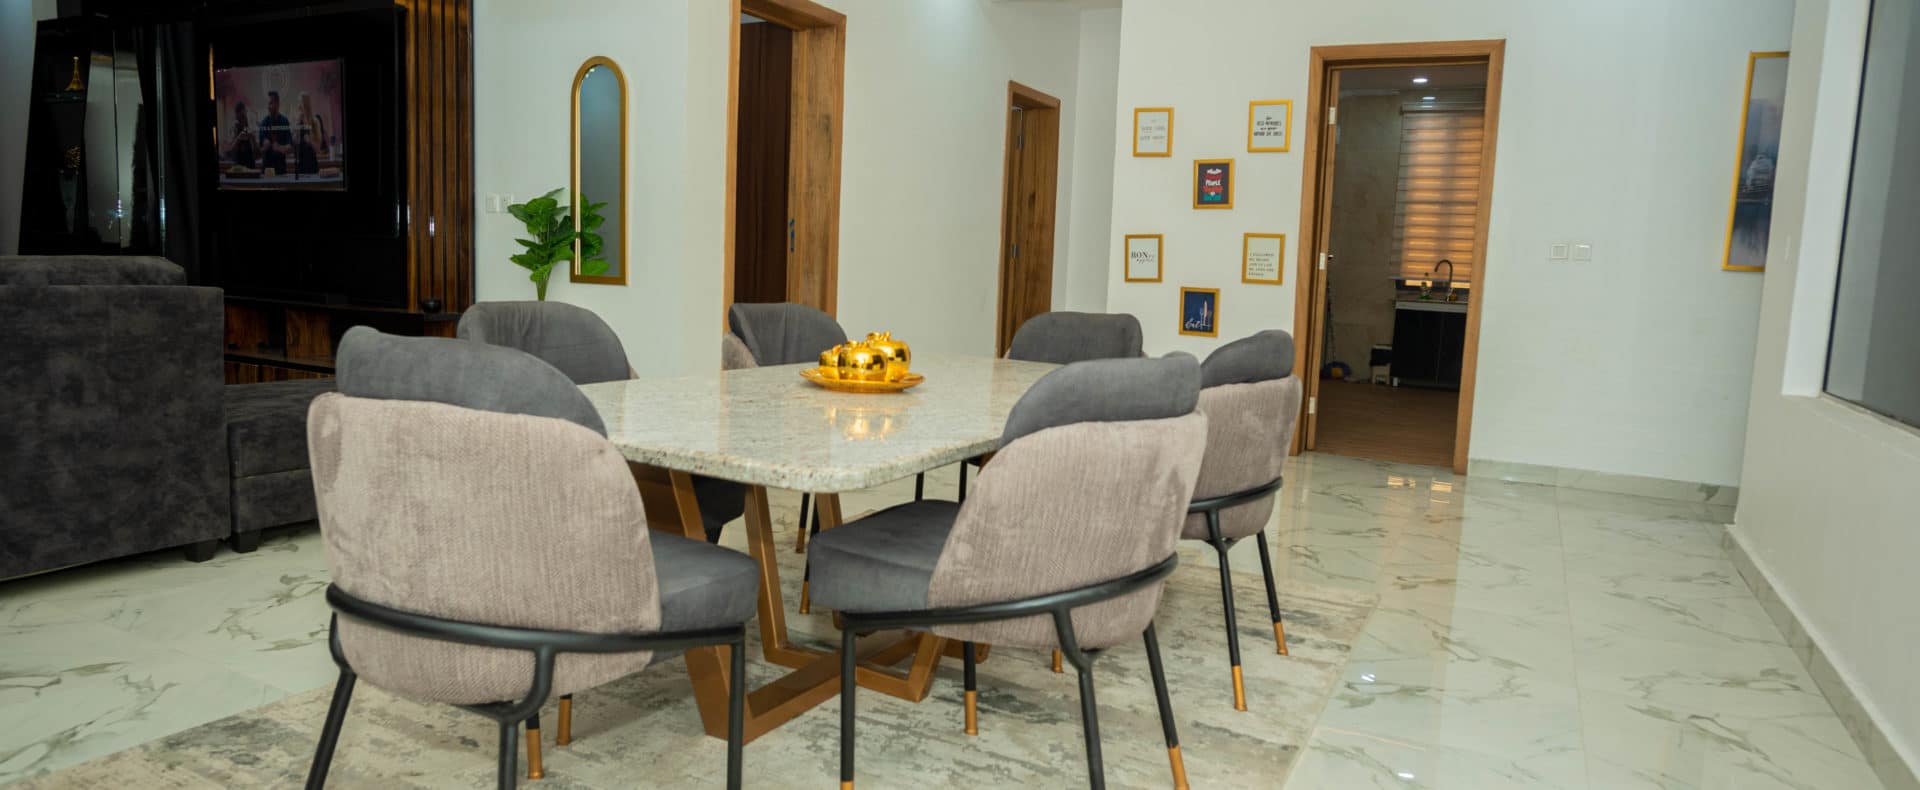 Luxury 2 Bedroom Newocean Short Let Apartment In Lekki Phase 1 Lagos Nigeria